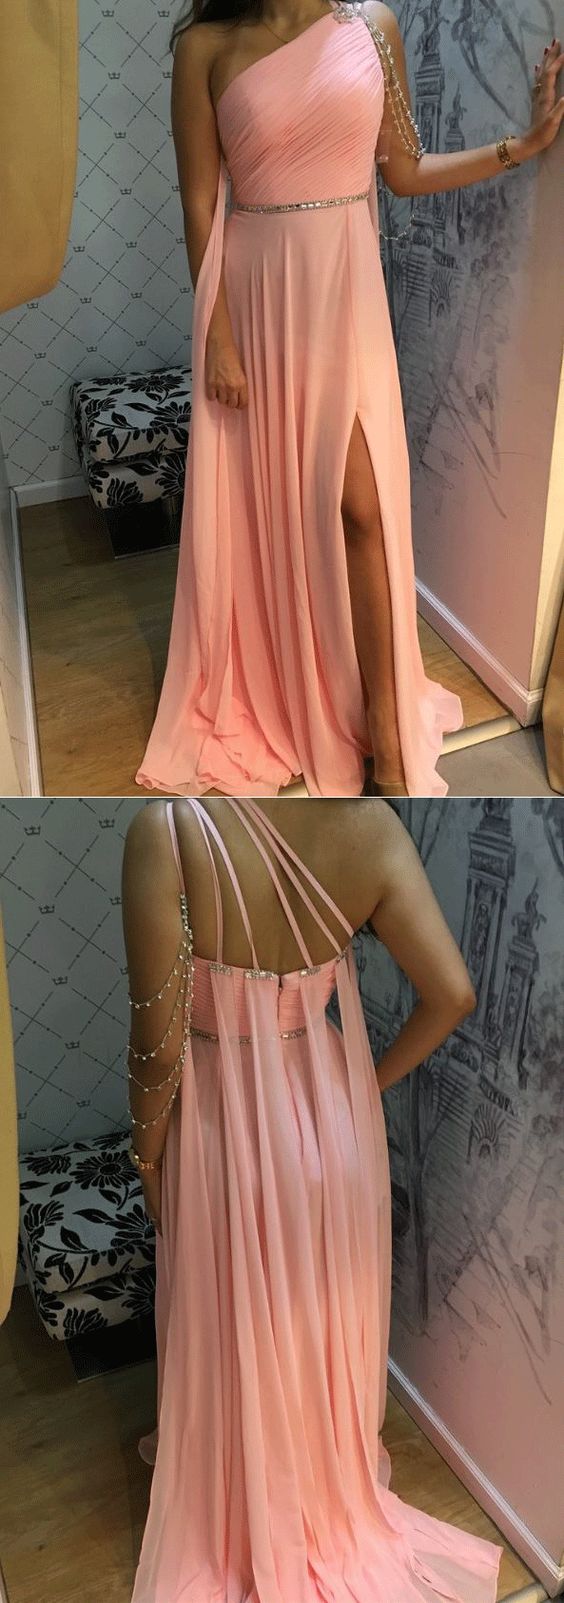 One Shoulder Chiffon Evening Dress, Sexy Pink Side Slit Prom Party Dress CD9341